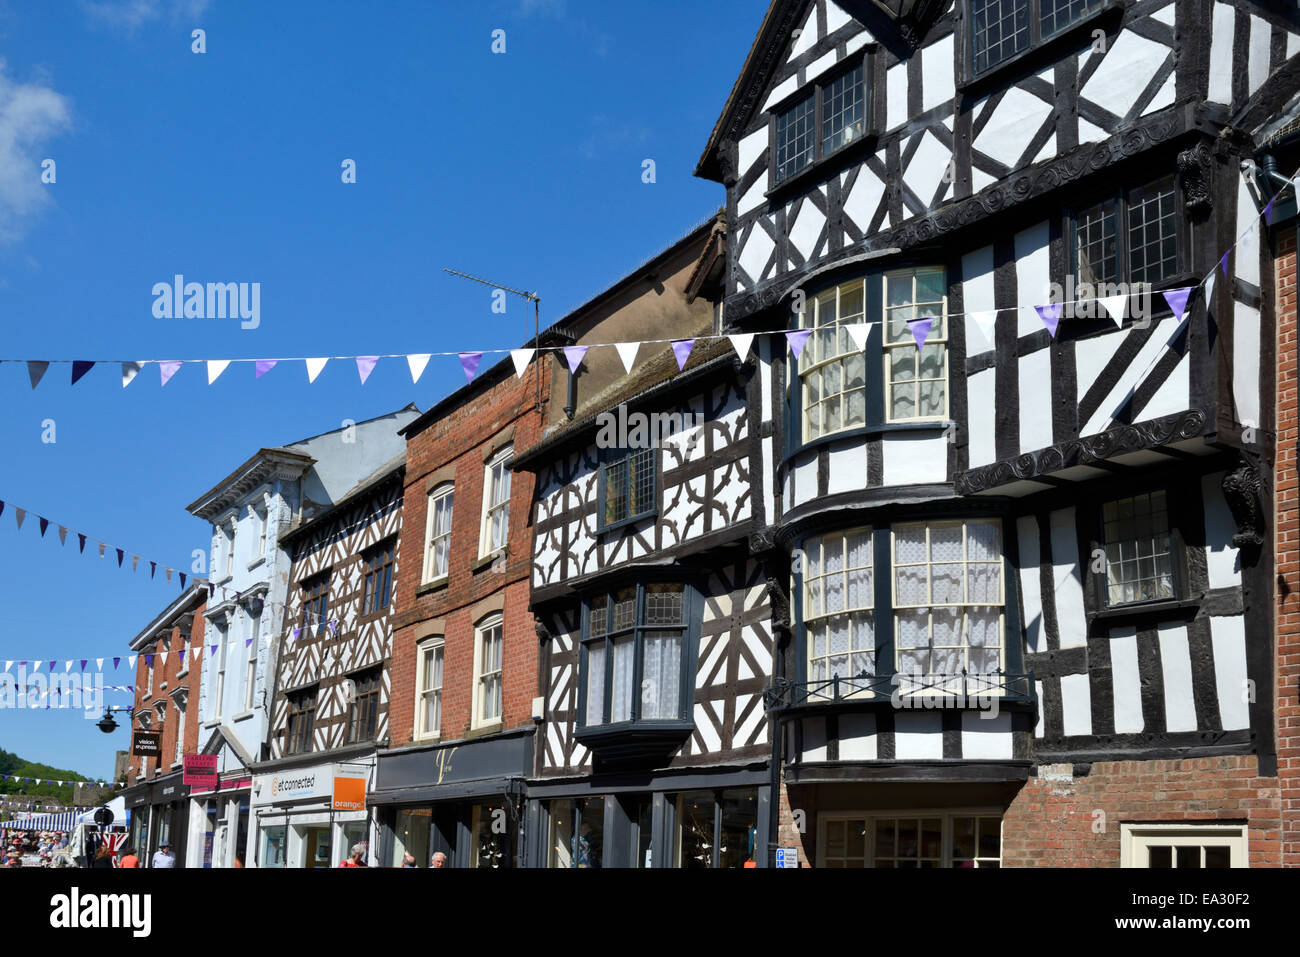 Medieval timber framed buildings, High Street, Ludlow, Shropshire, England, United Kingdom. Europe Stock Photo